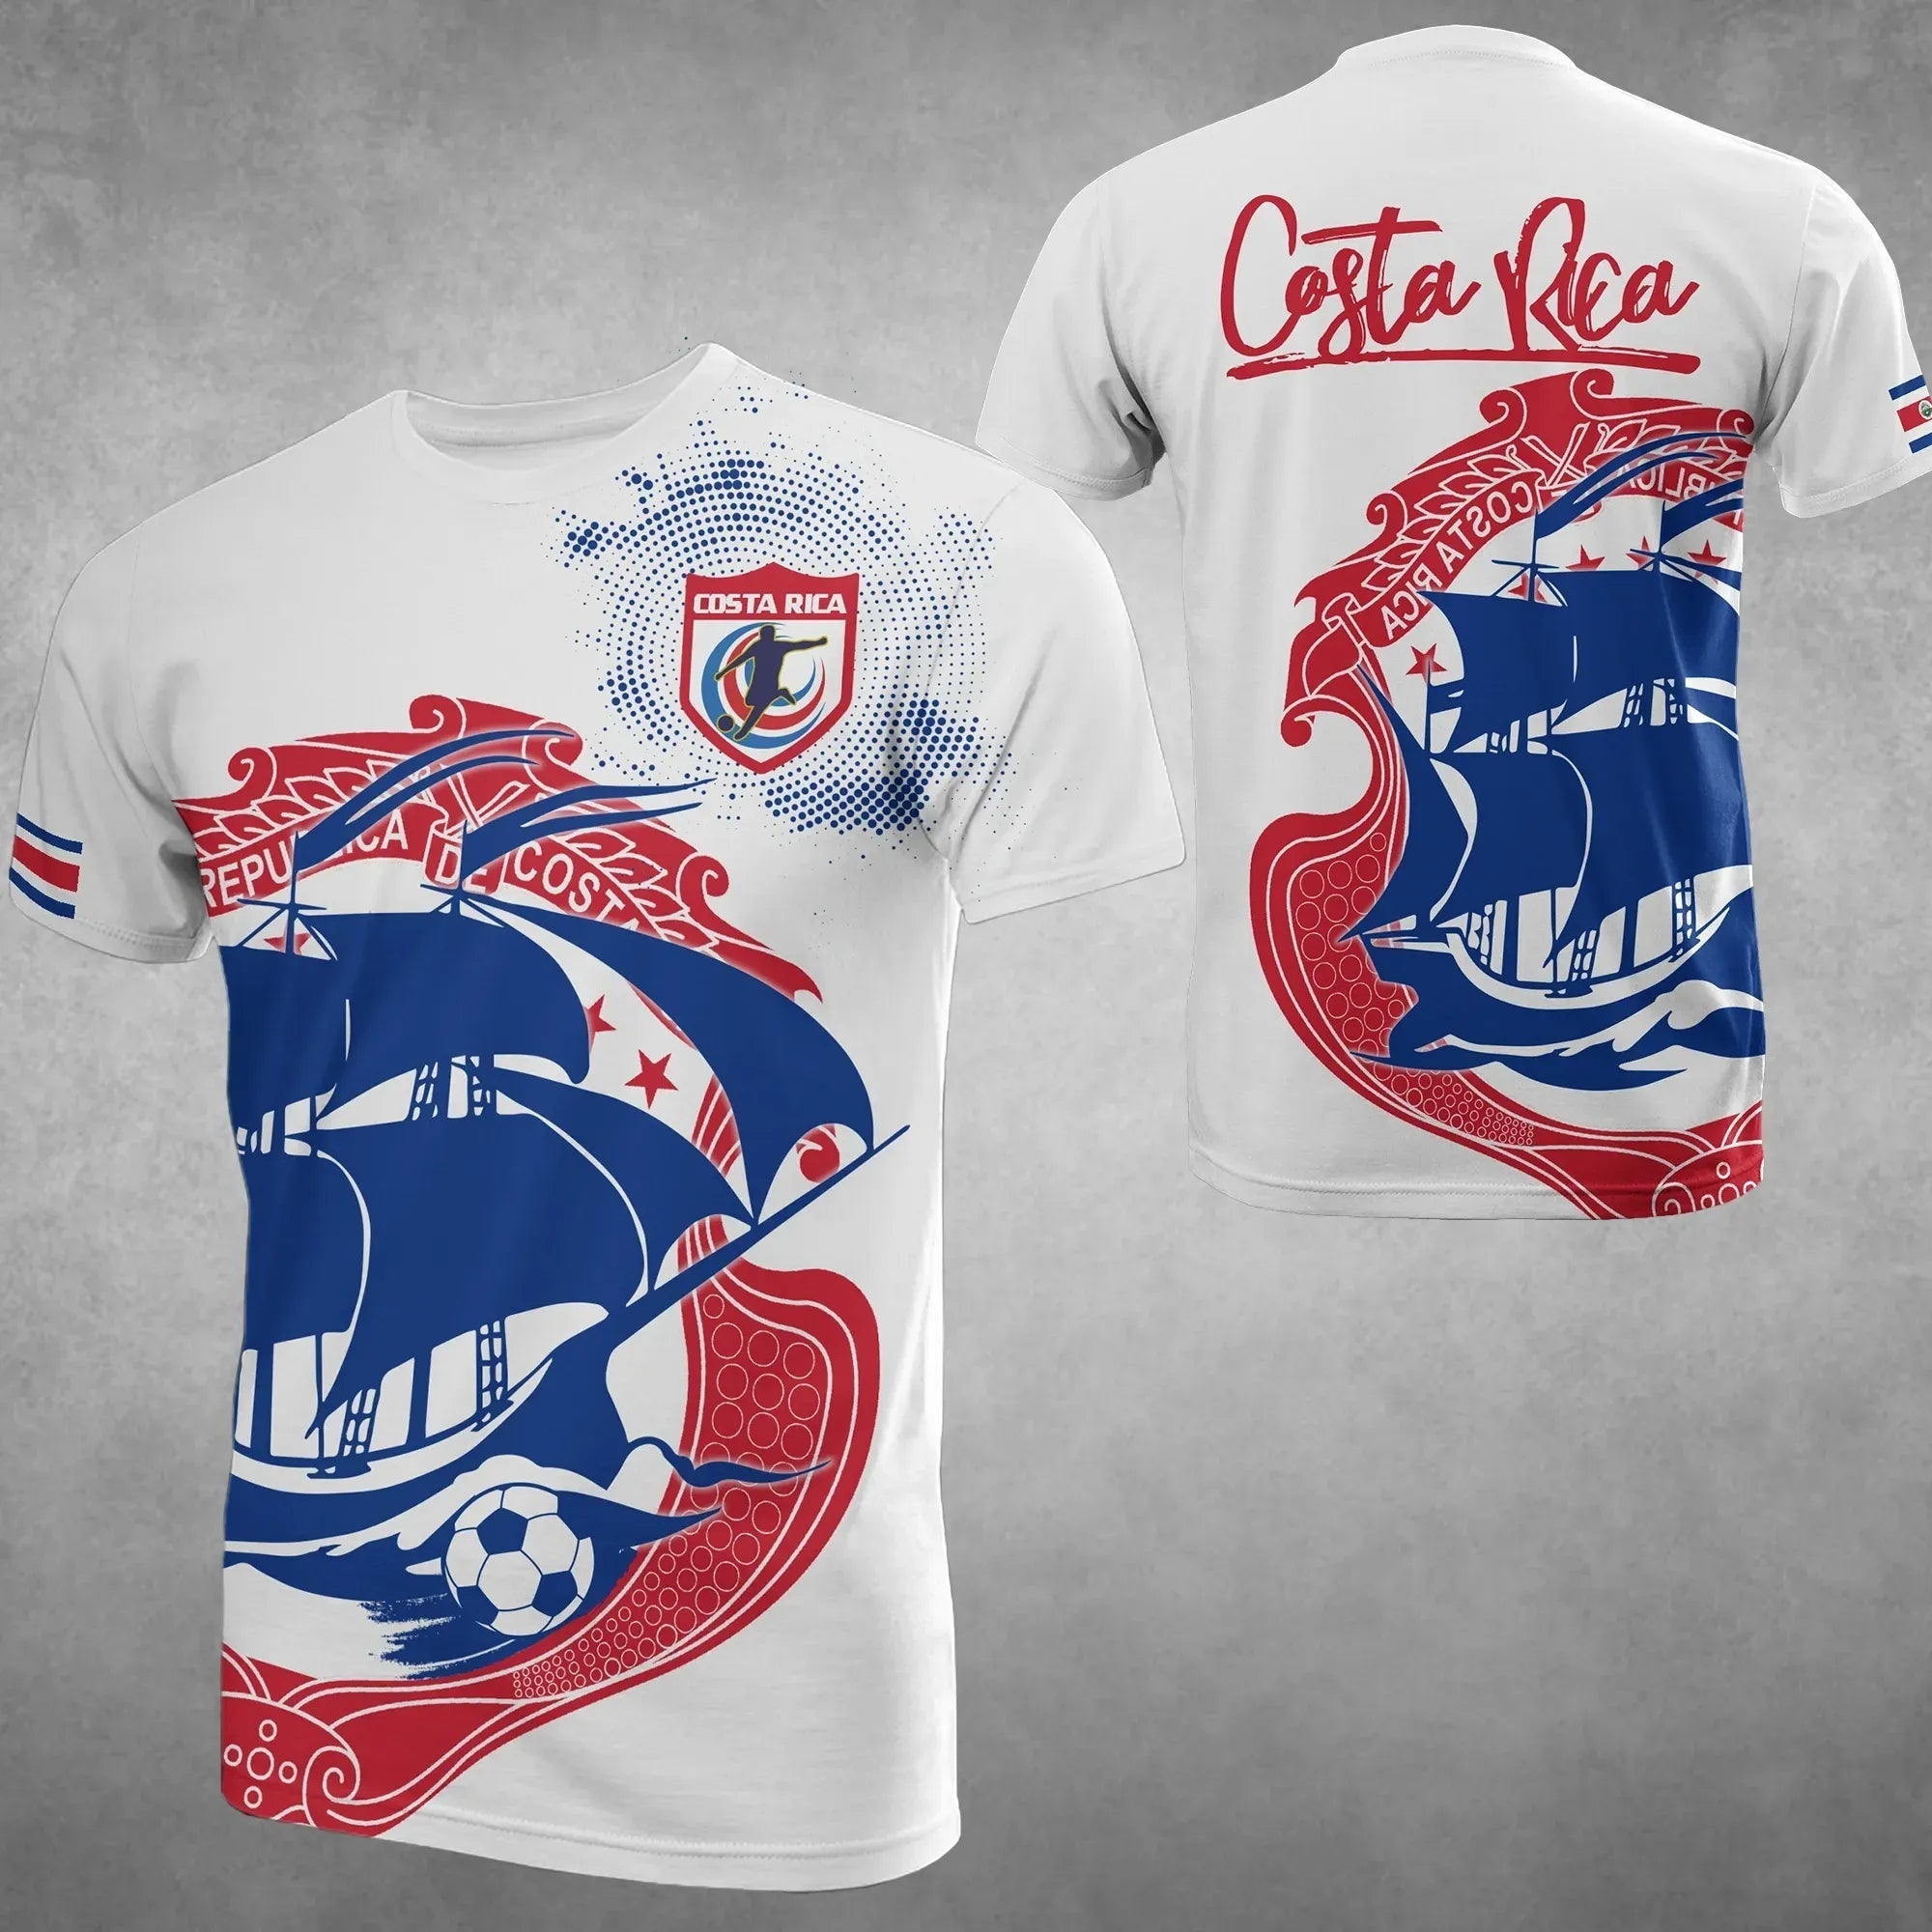 soccer-costa-rica-t-shirts-bh